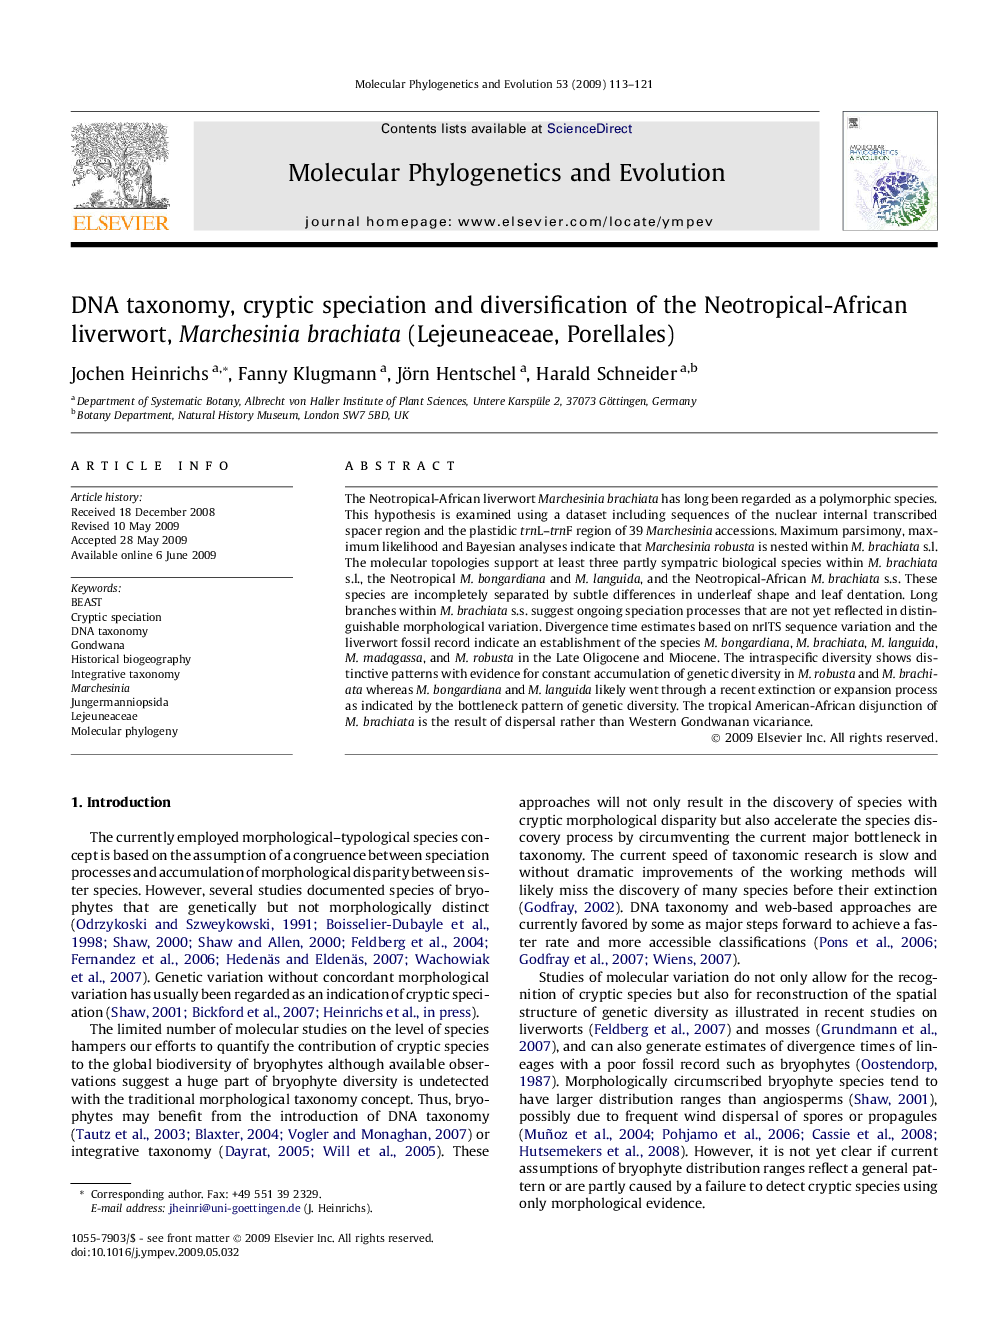 DNA taxonomy, cryptic speciation and diversification of the Neotropical-African liverwort, Marchesinia brachiata (Lejeuneaceae, Porellales)